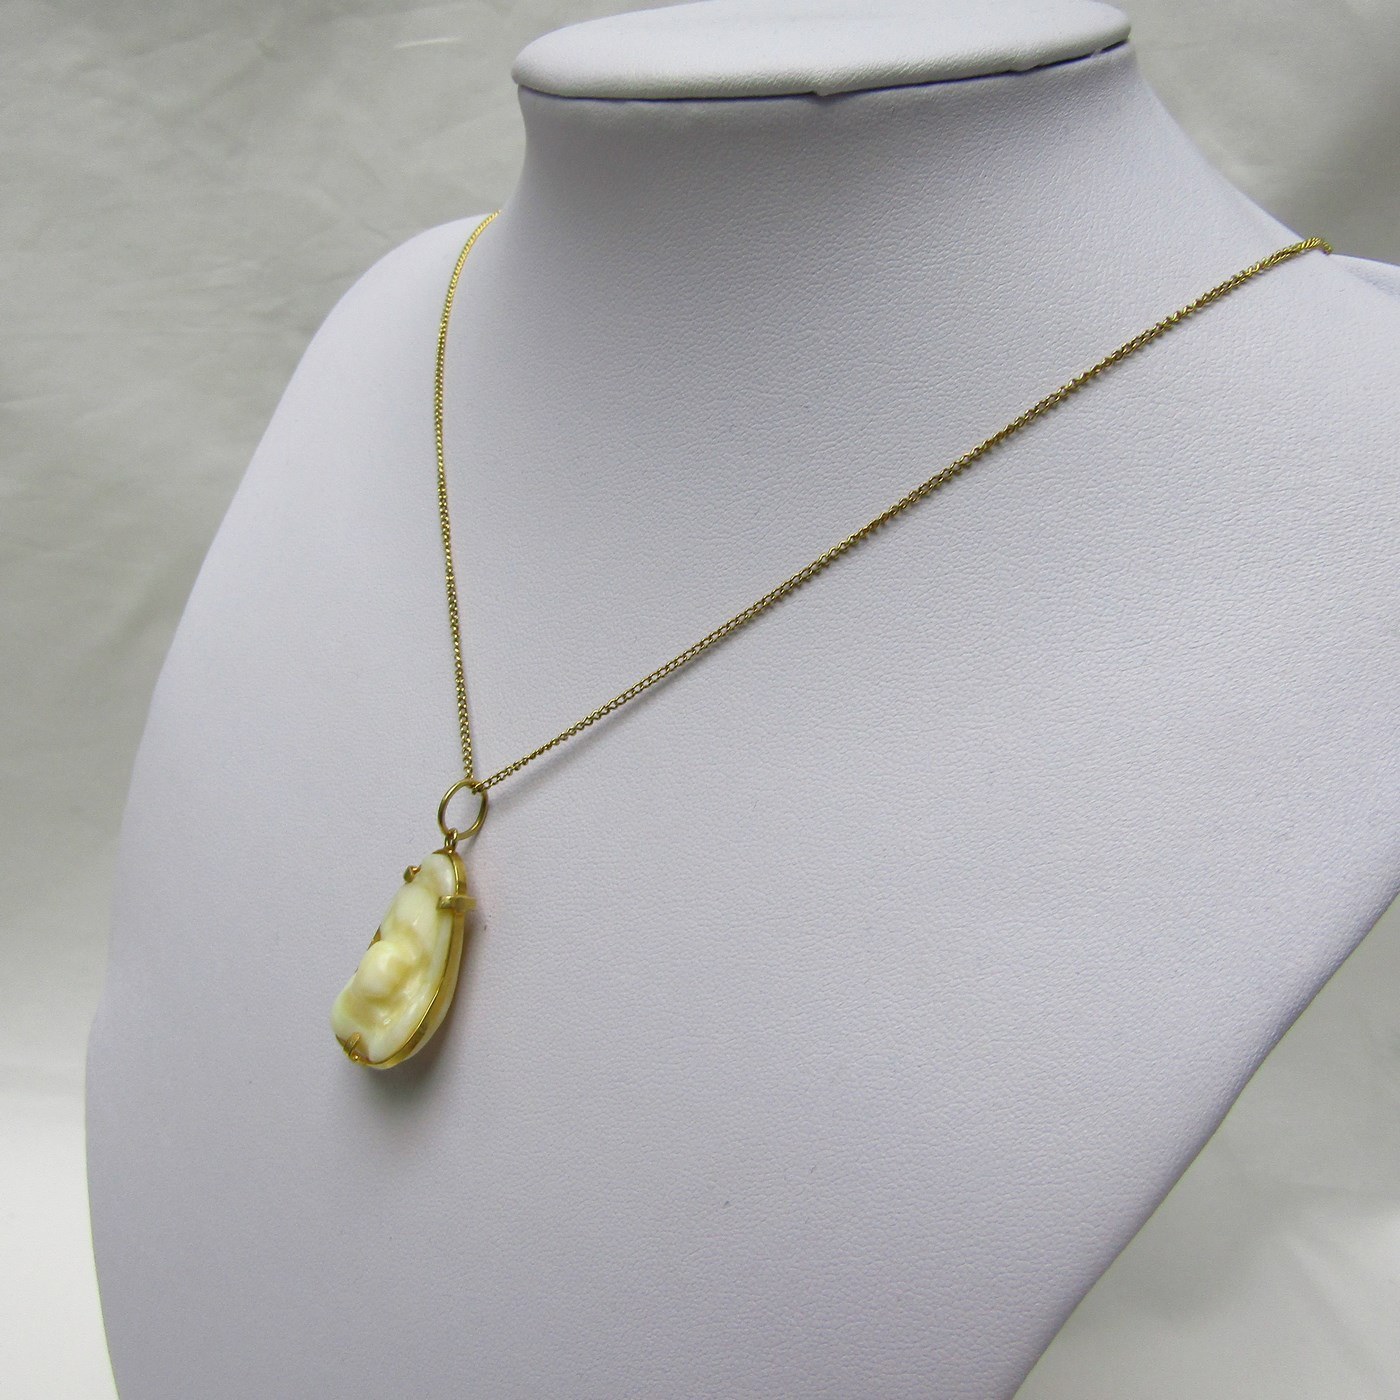 18k yellow gold chain with amulet (Otolith or Corvina bone pendant